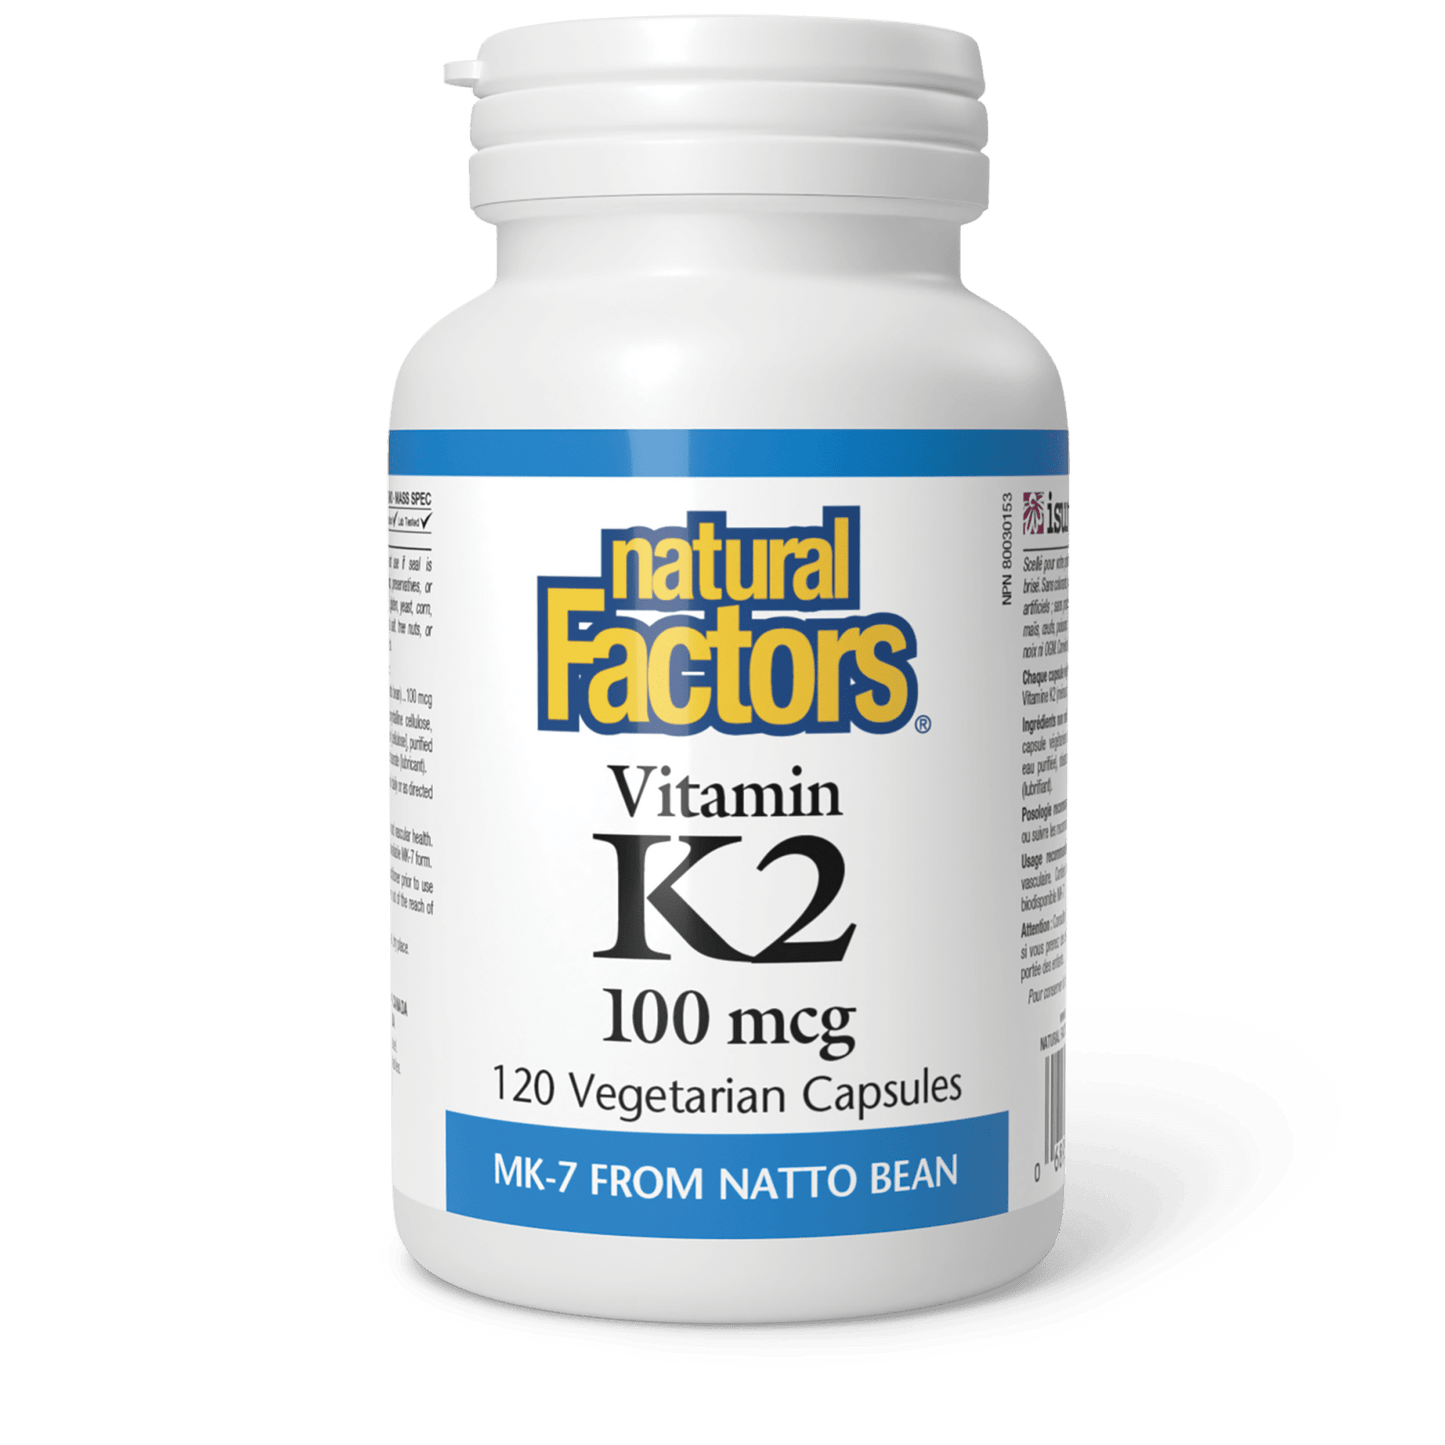 Vitamin K2 100 mcg, Natural Factors|v|image|1295